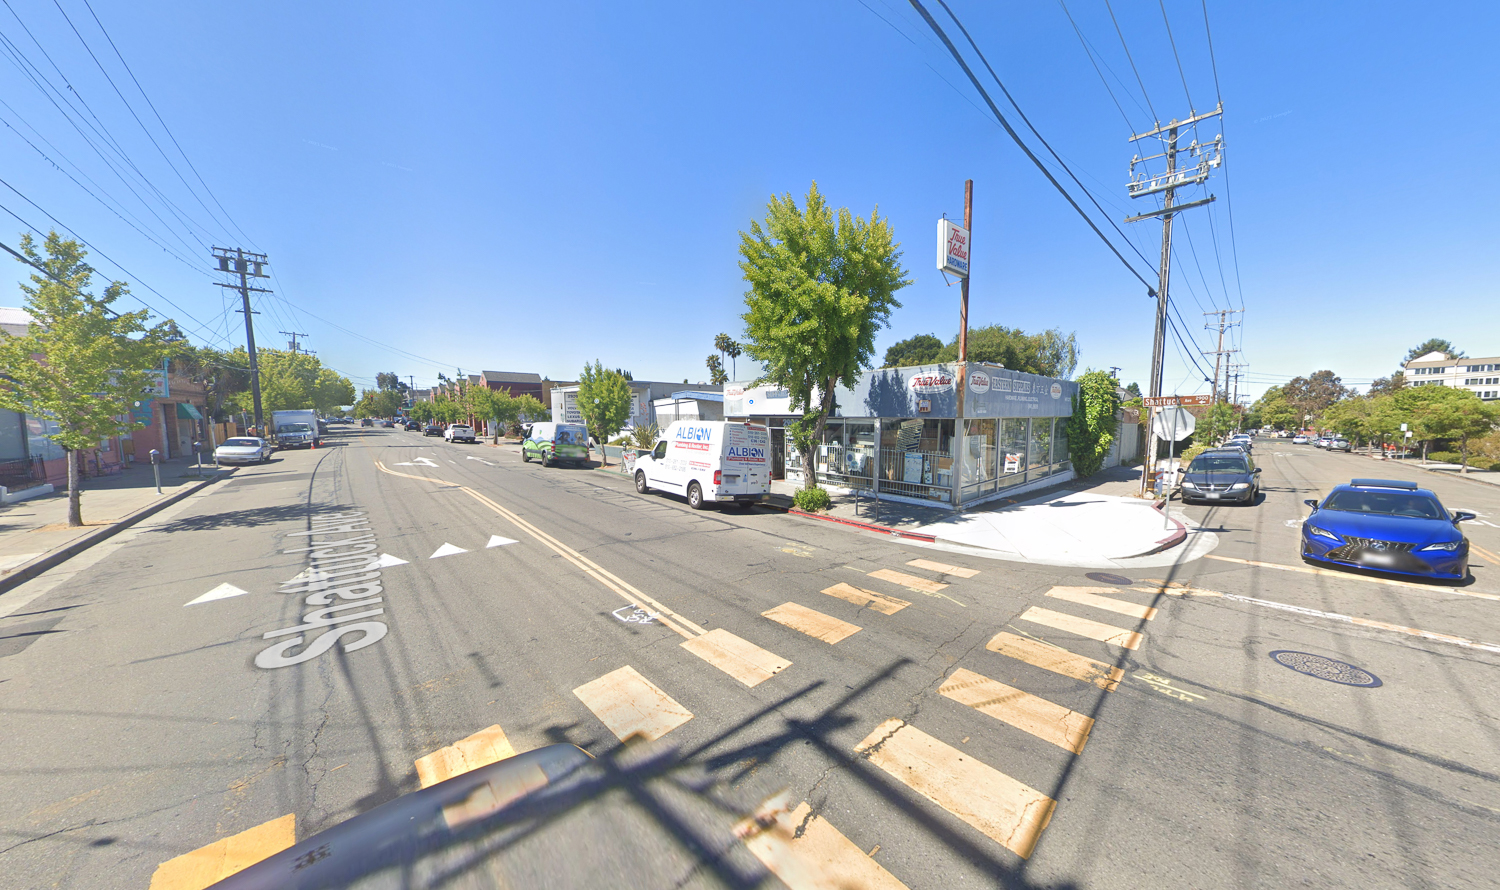 2920 Shattuck Avenue, image via Google Street View